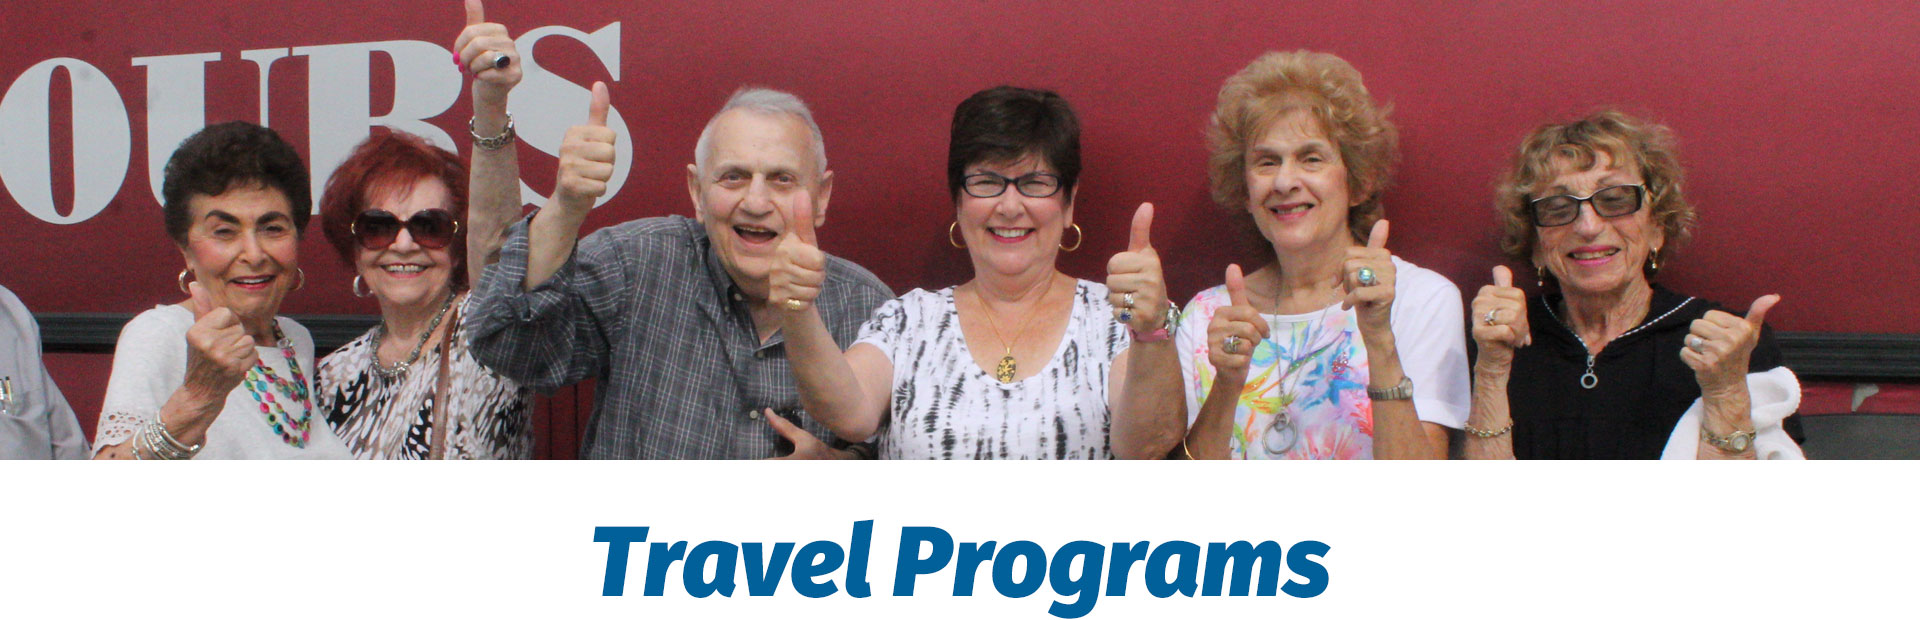 travel program for seniors, Kleinlife travel for adults, active adults travel programs